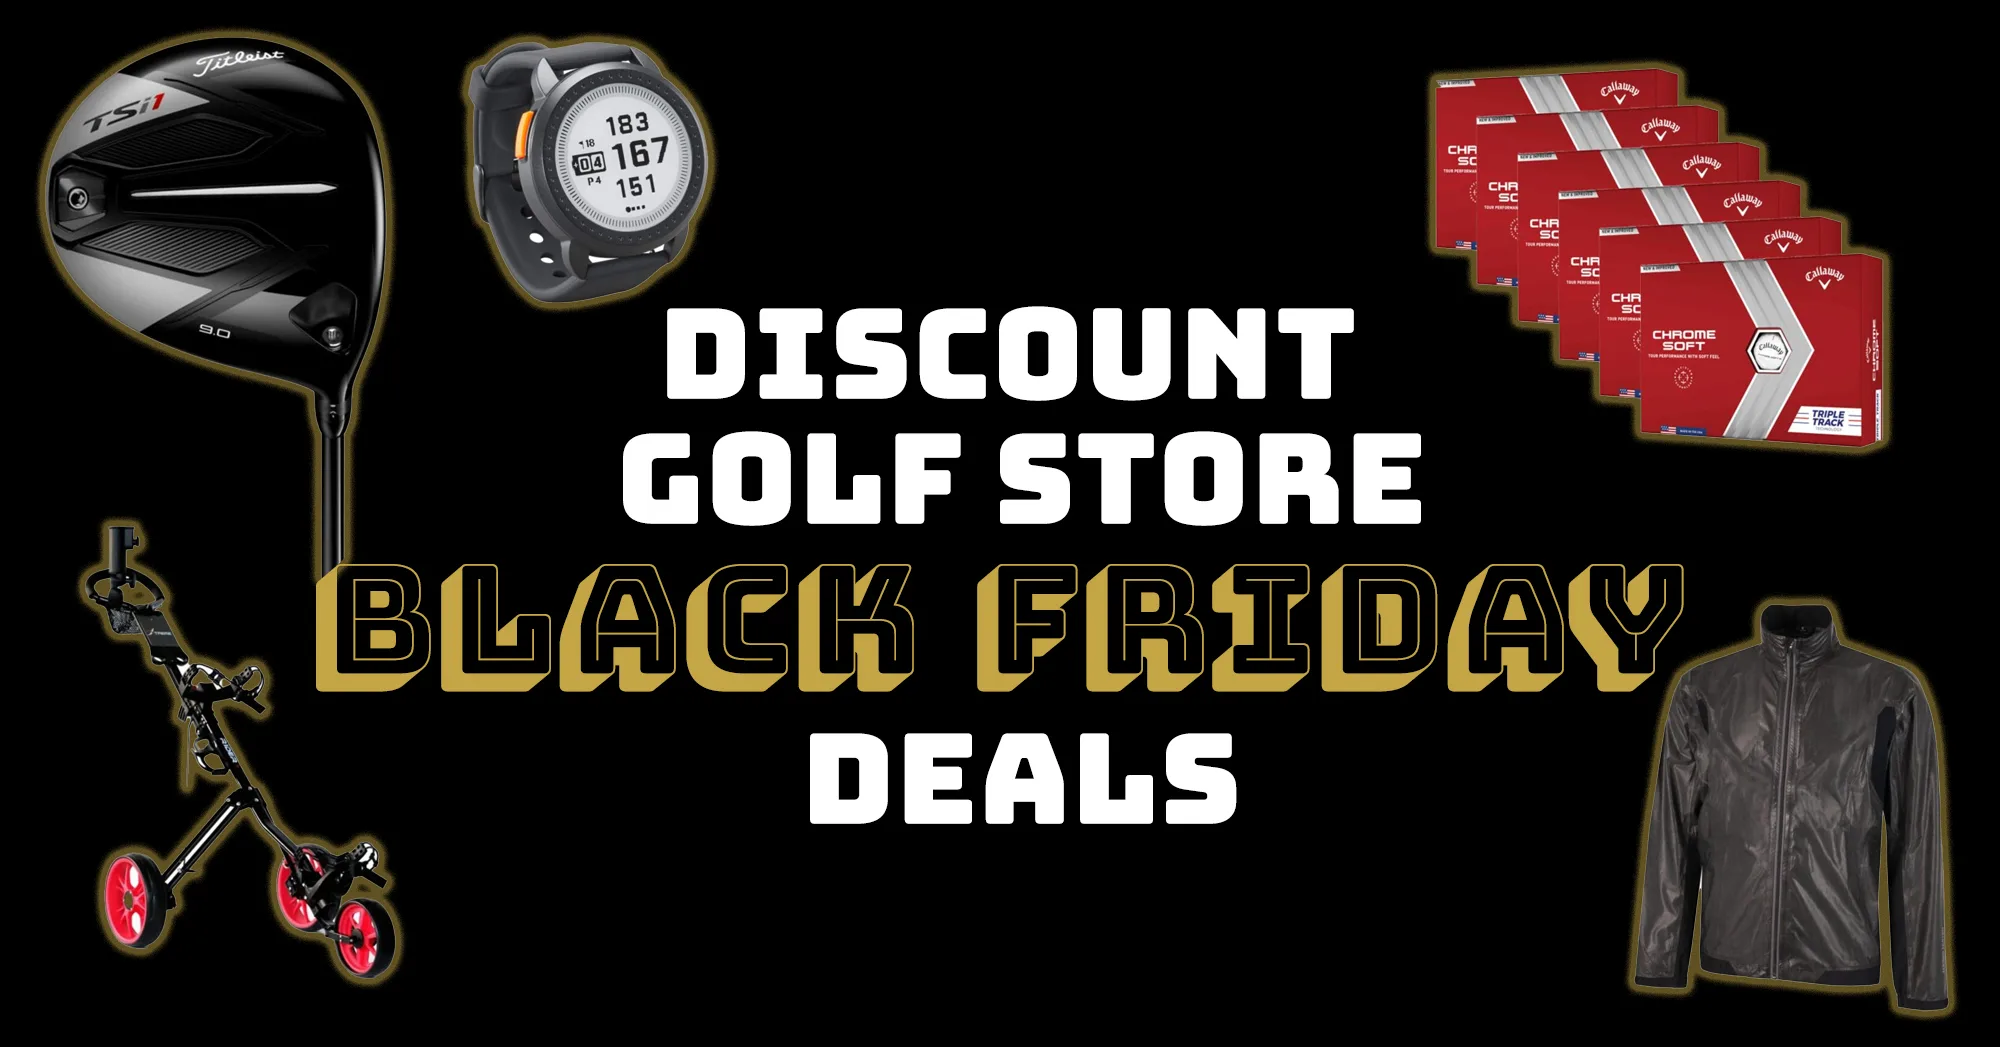 Discount Golf Store Black Friday Golf Deals